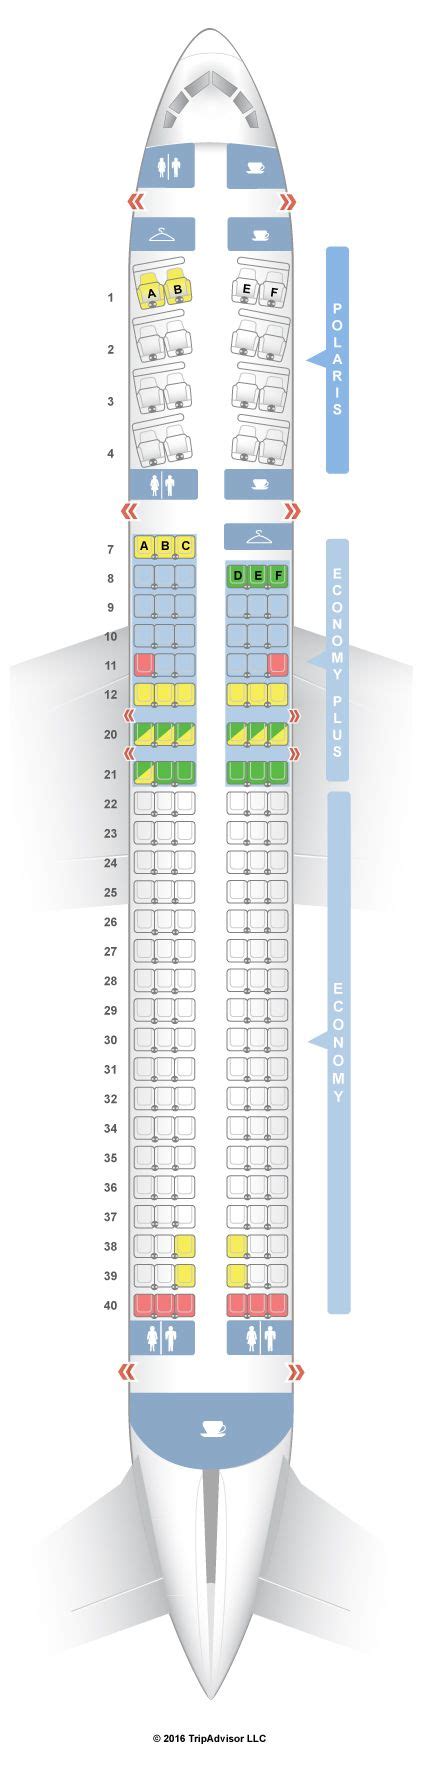 boeing 757 seat chart